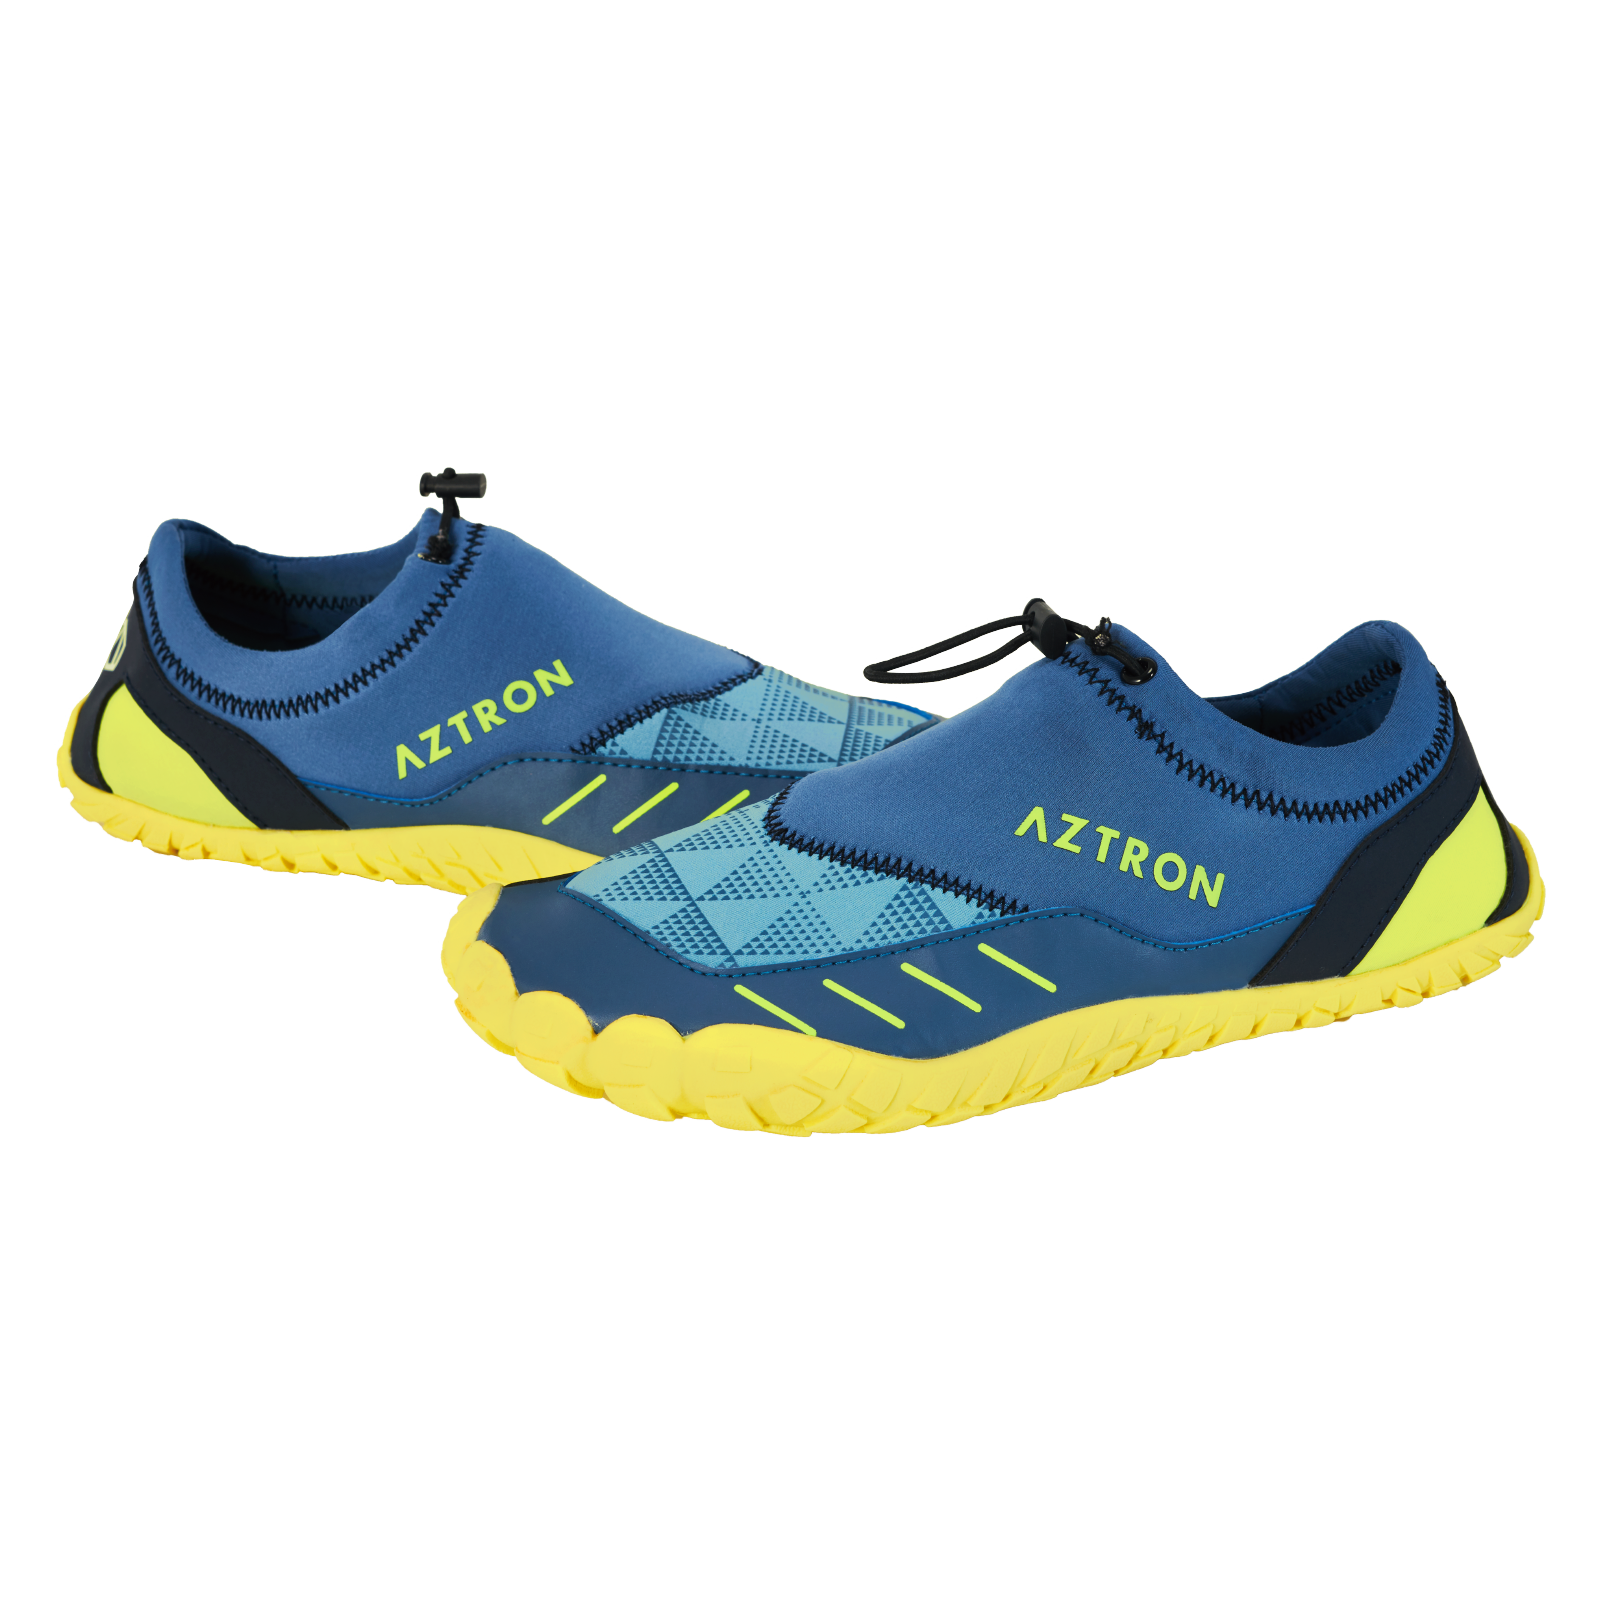 Aztron Libra Water Shoes